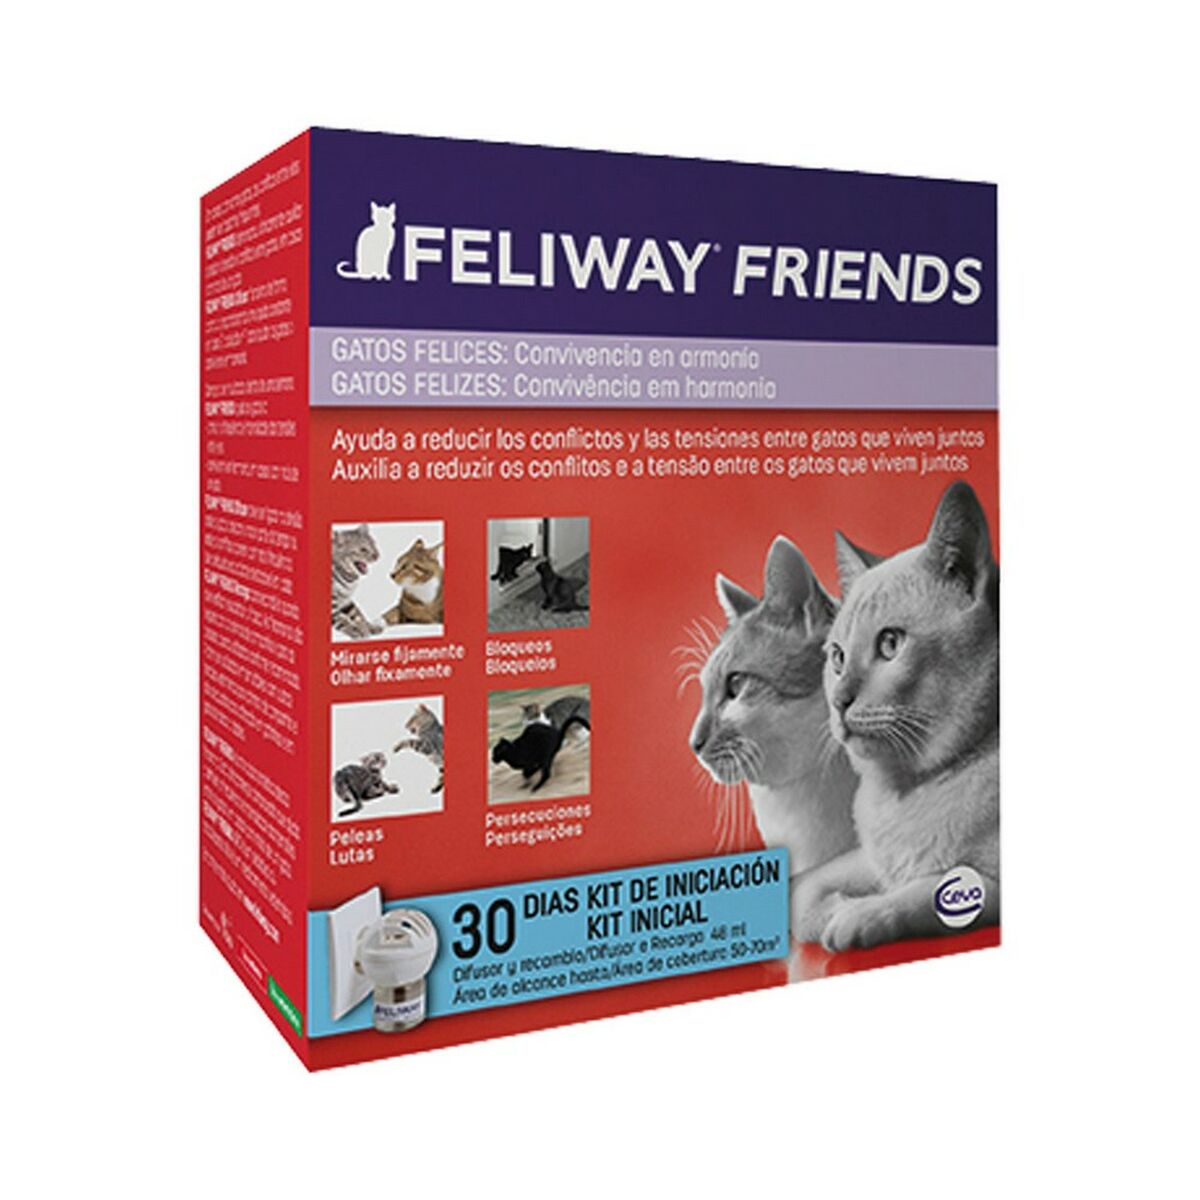 Feliway Friends Starter Kit(Dedicated fumigator + diffuser)cat stress relief fumigator